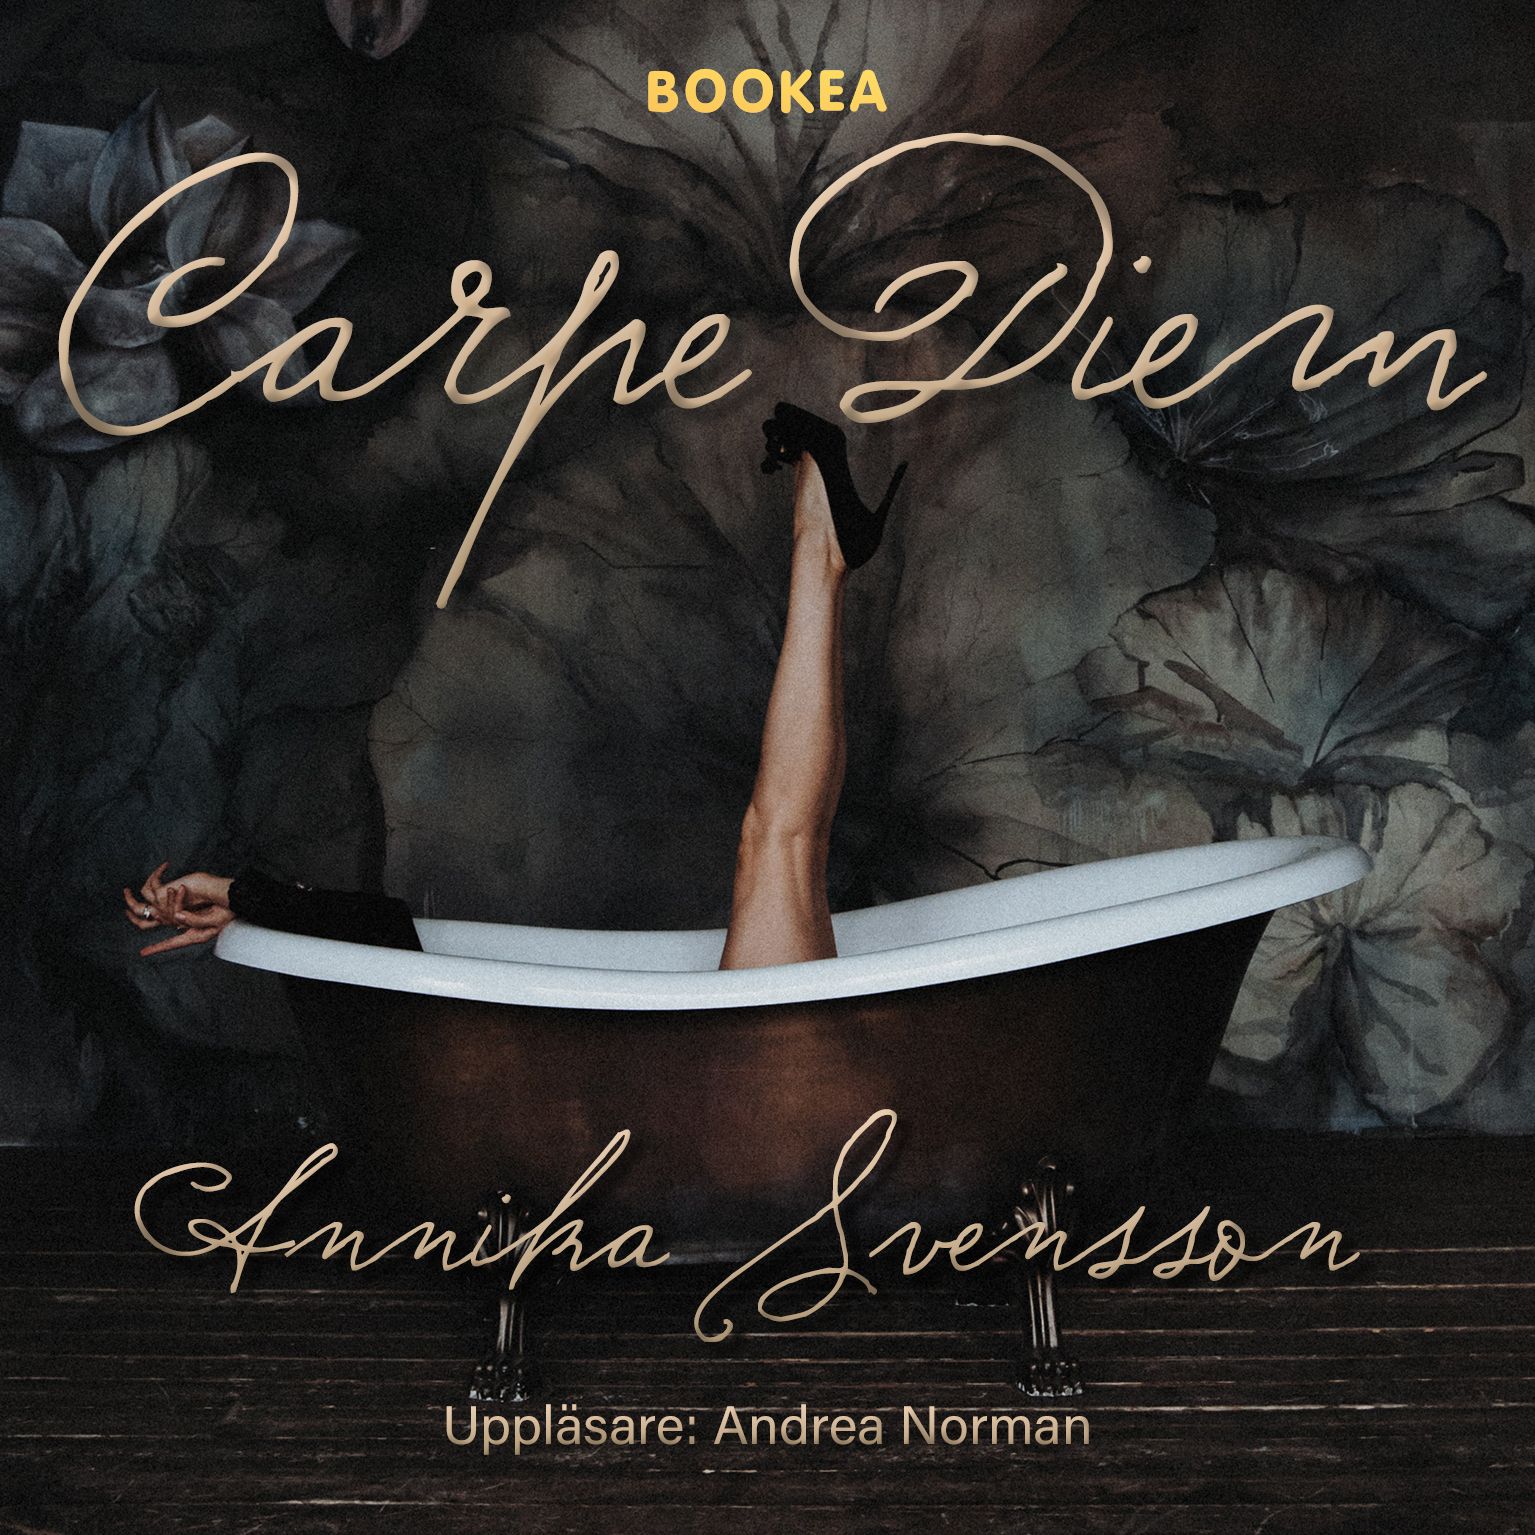 Carpe diem, audiobook by Annika Svensson